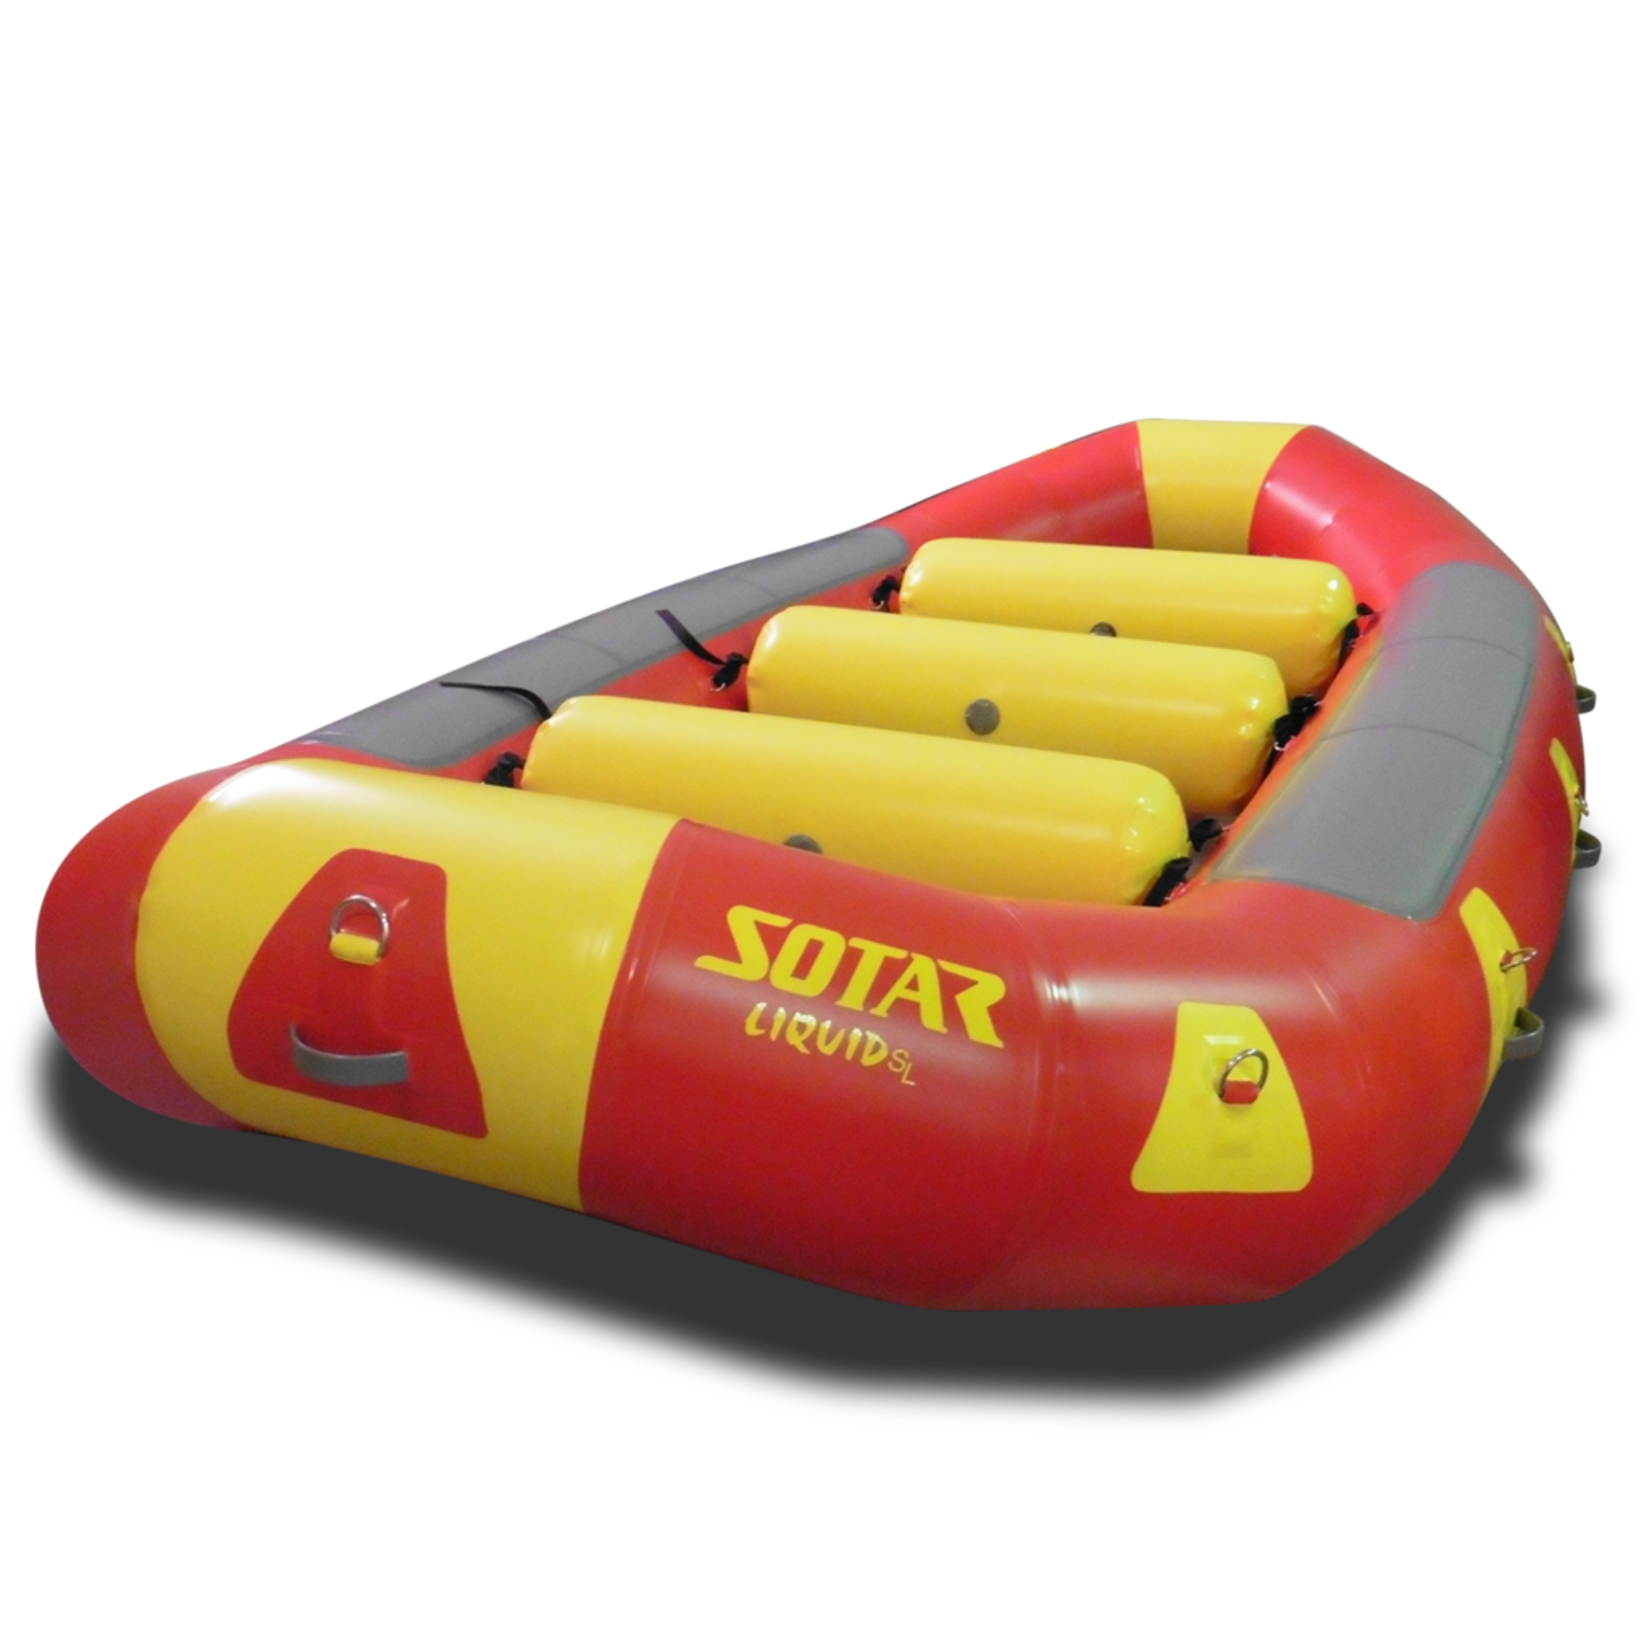 SOTAR SOTAR SL 14' Liquid Raft